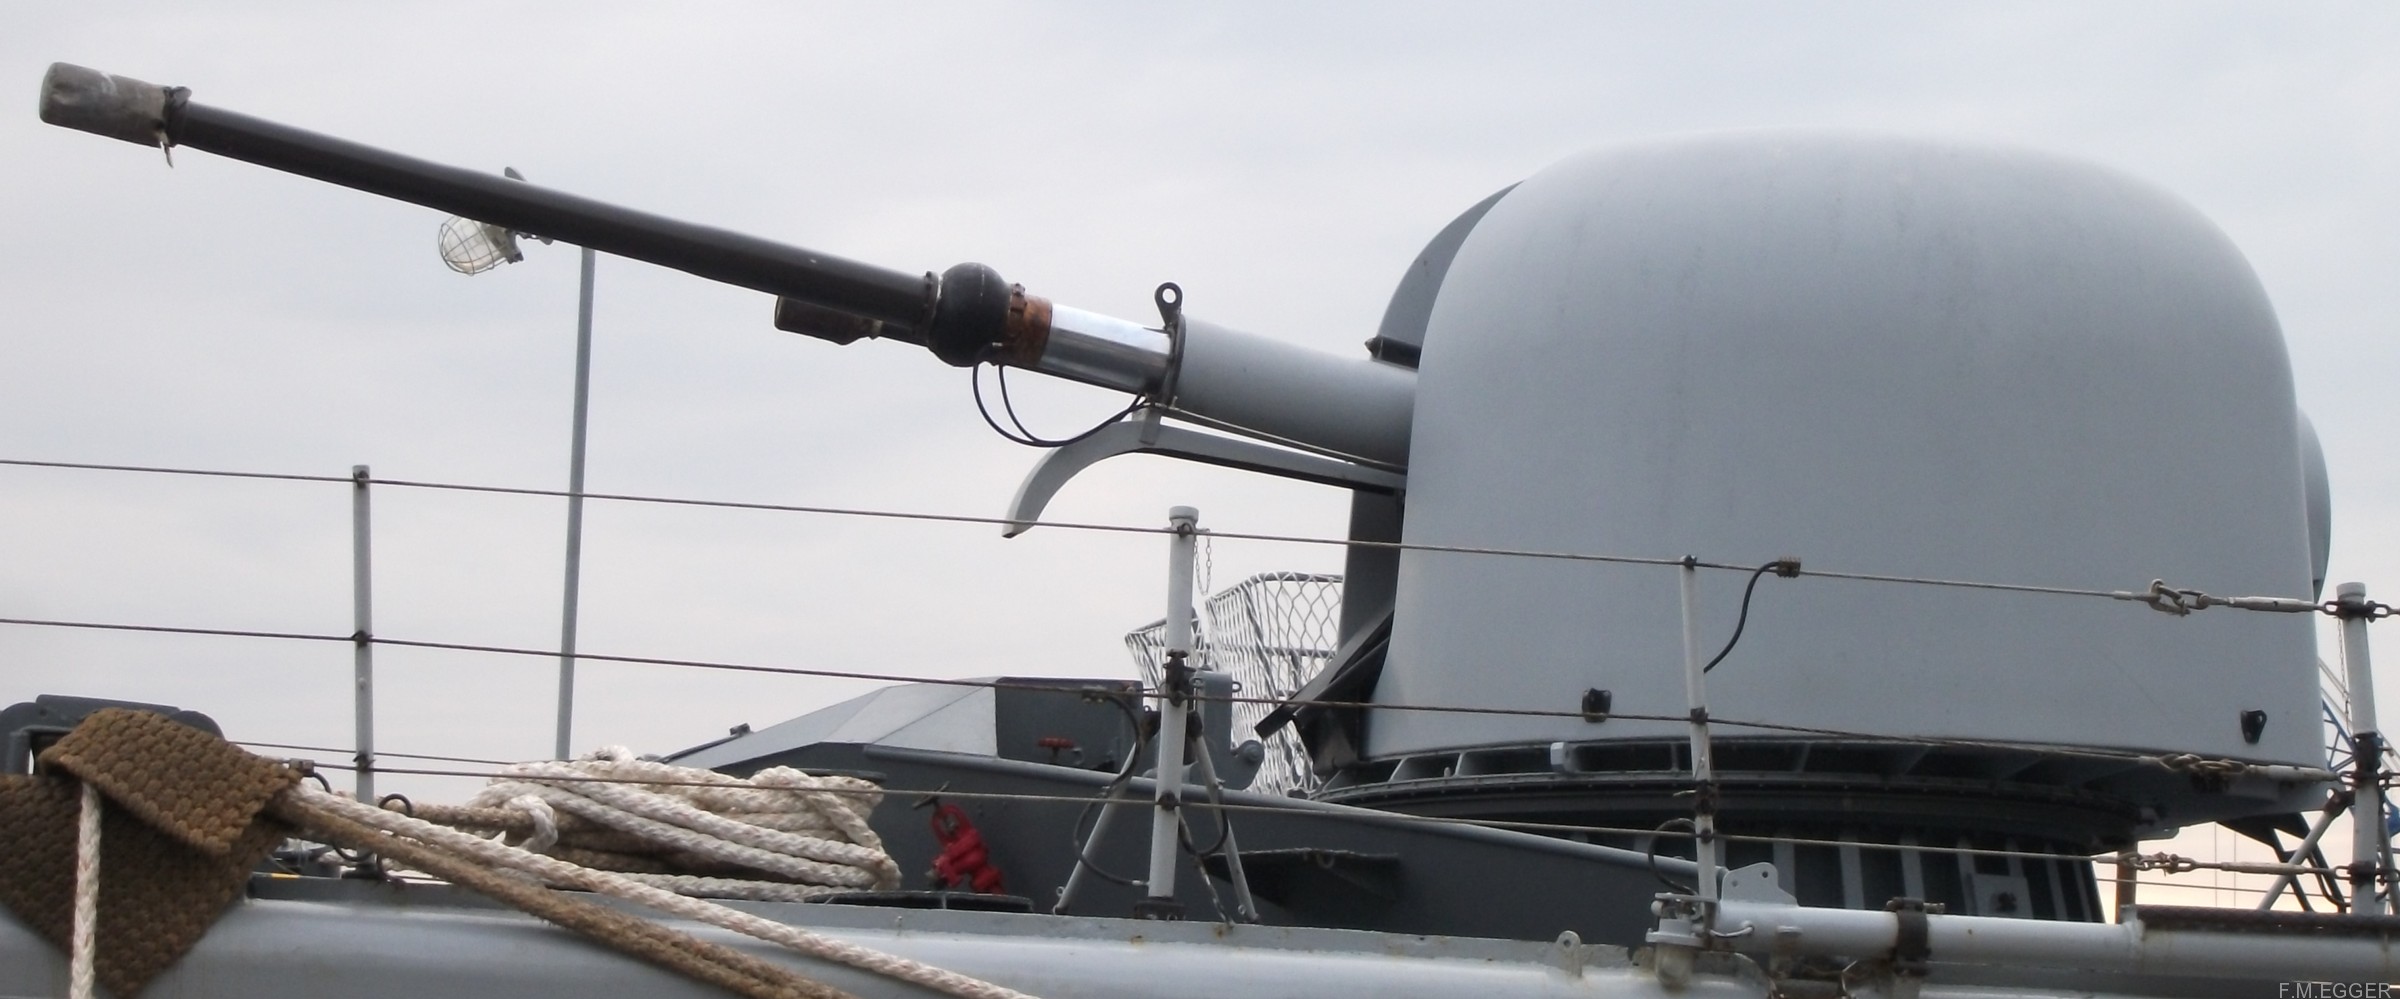 oto melara breda 76/62 76mm 62-caliber 3-inches naval gun super rapid 14